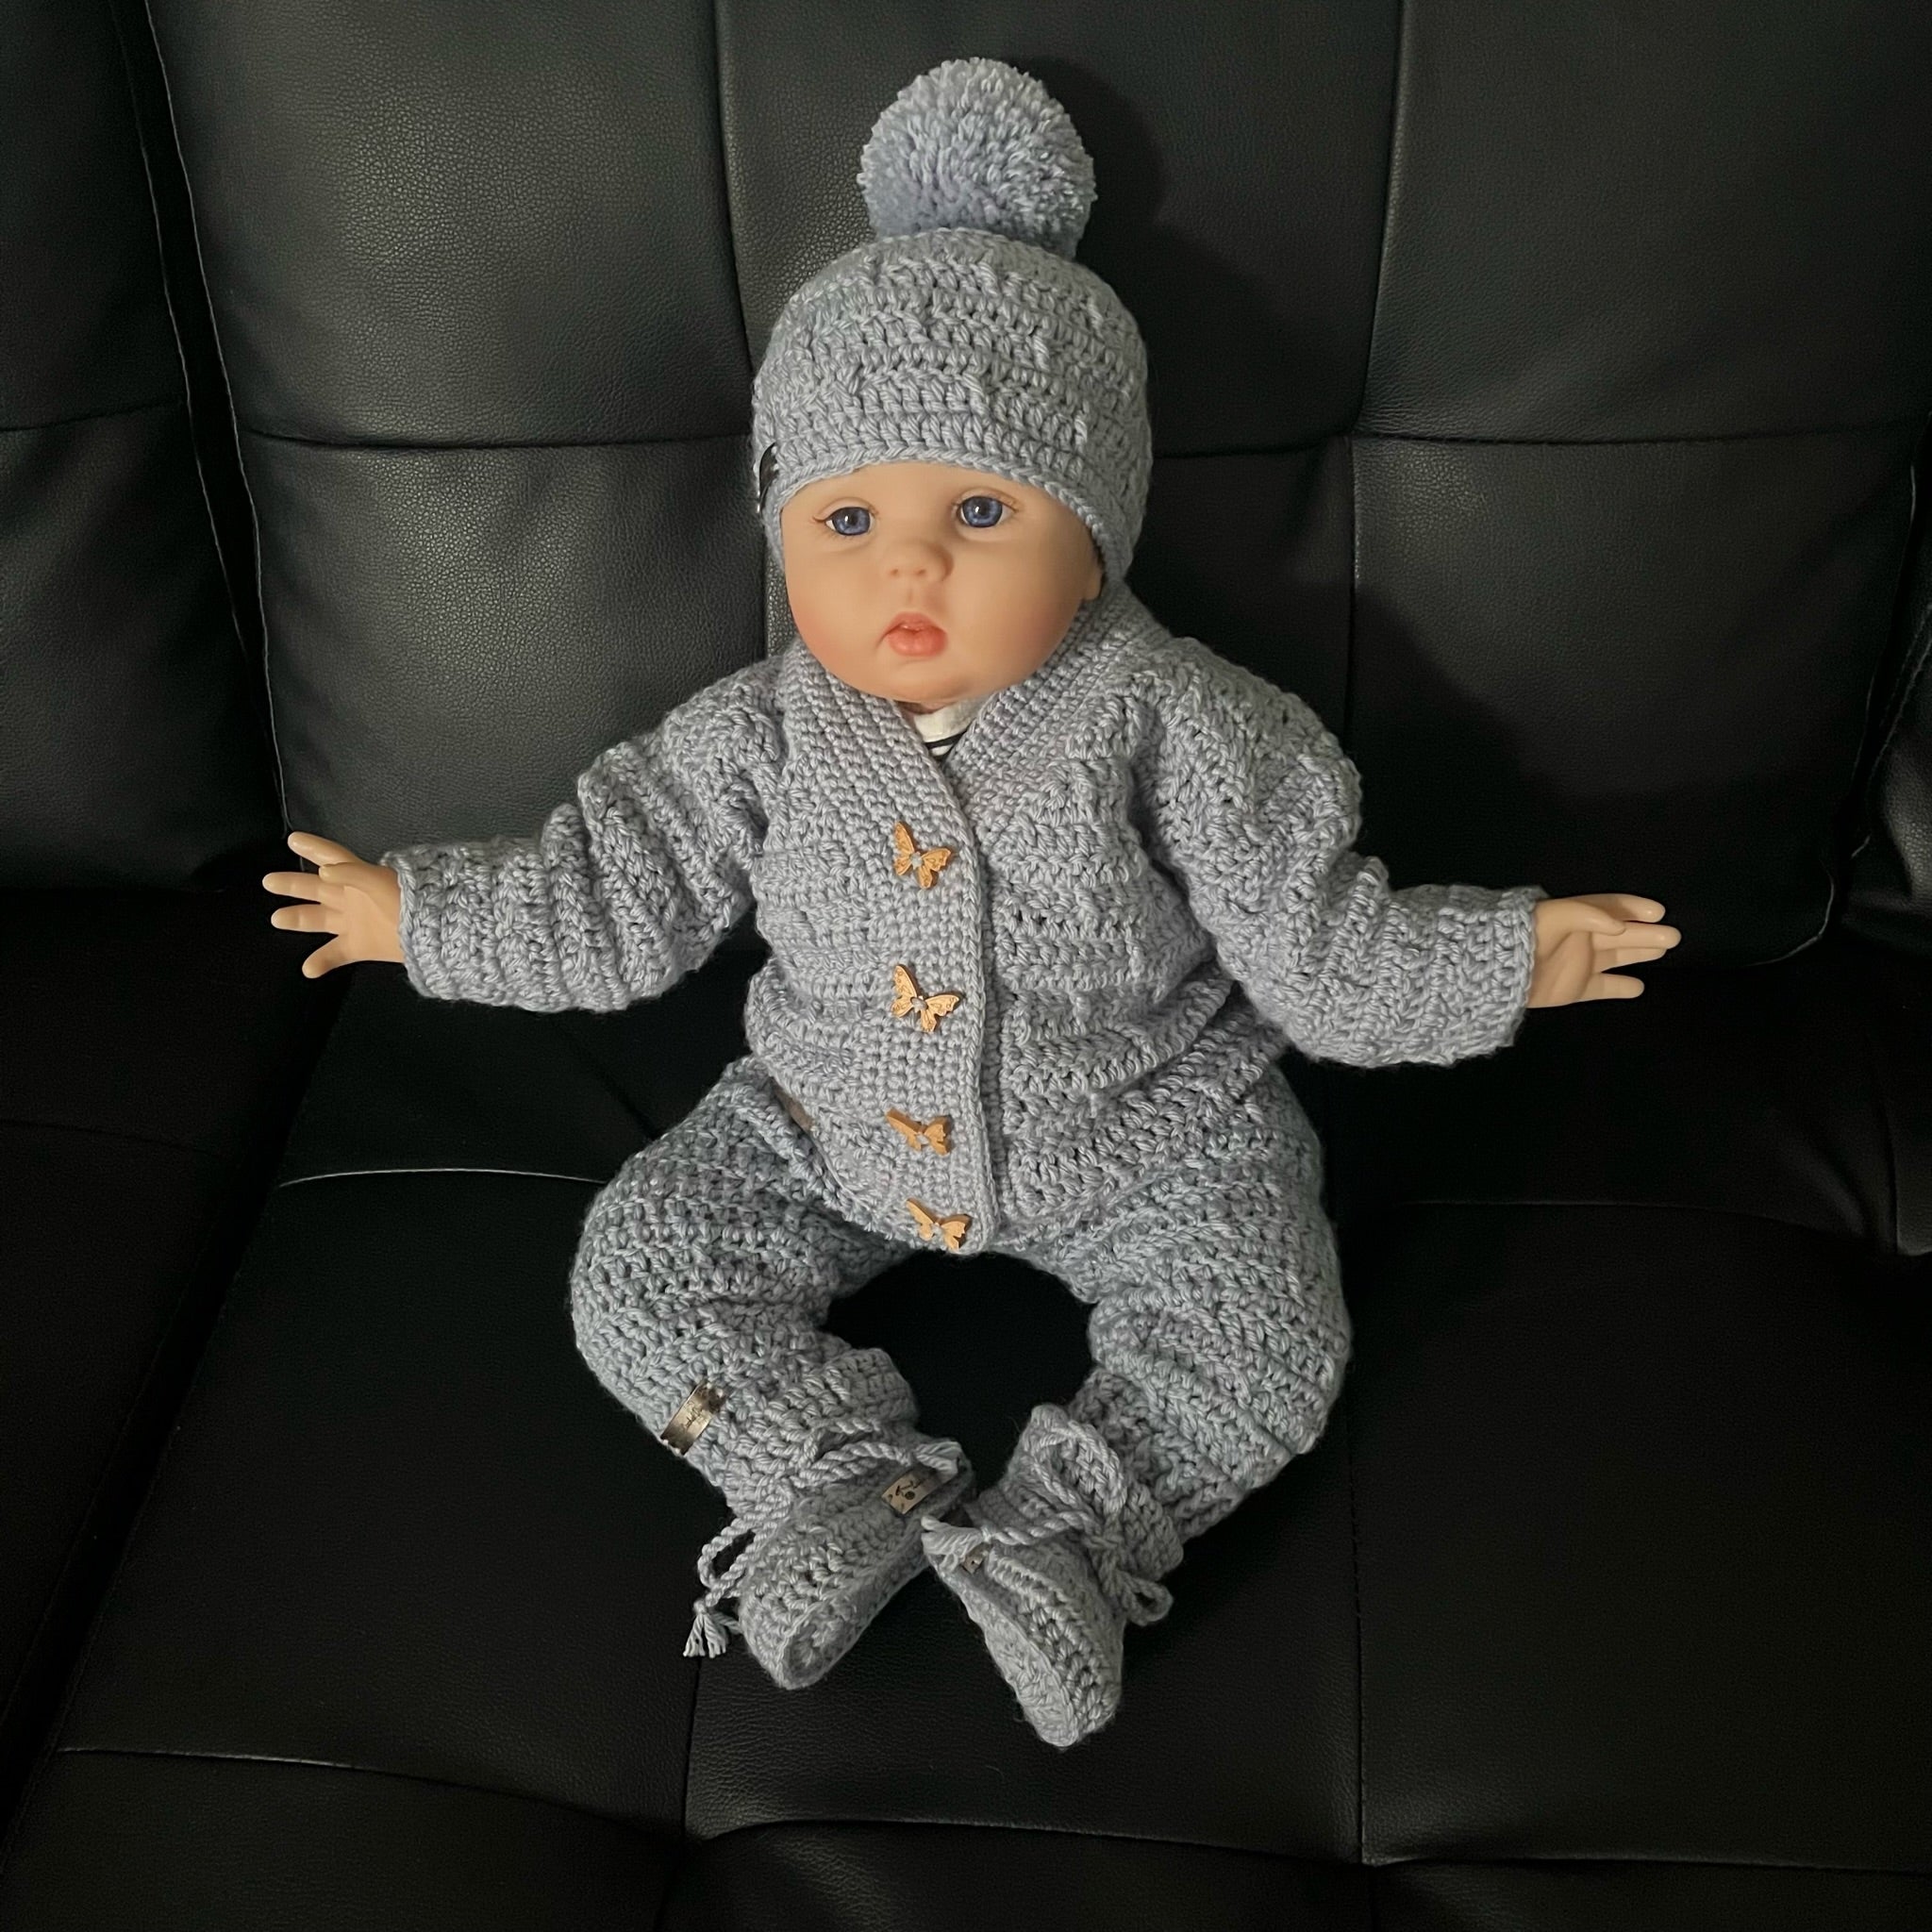 Toddling | Knit baby pants, Baby knitting patterns, Crochet baby pants